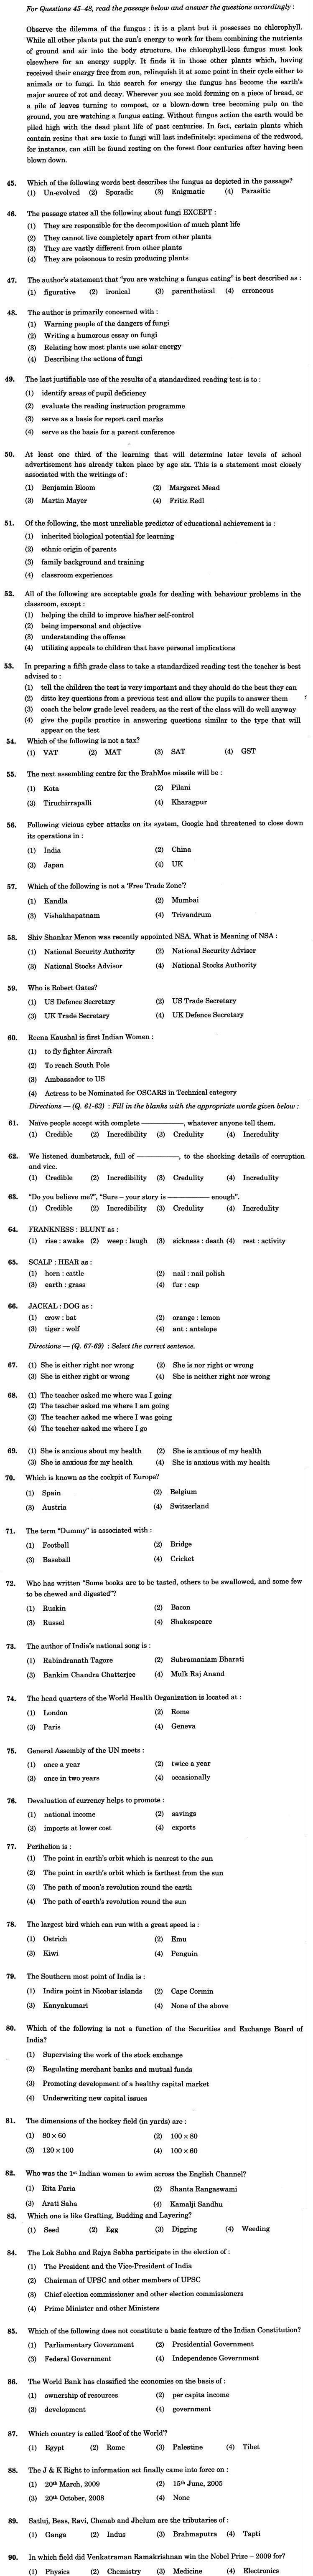 J&K B.Ed. 2010 Question Paper